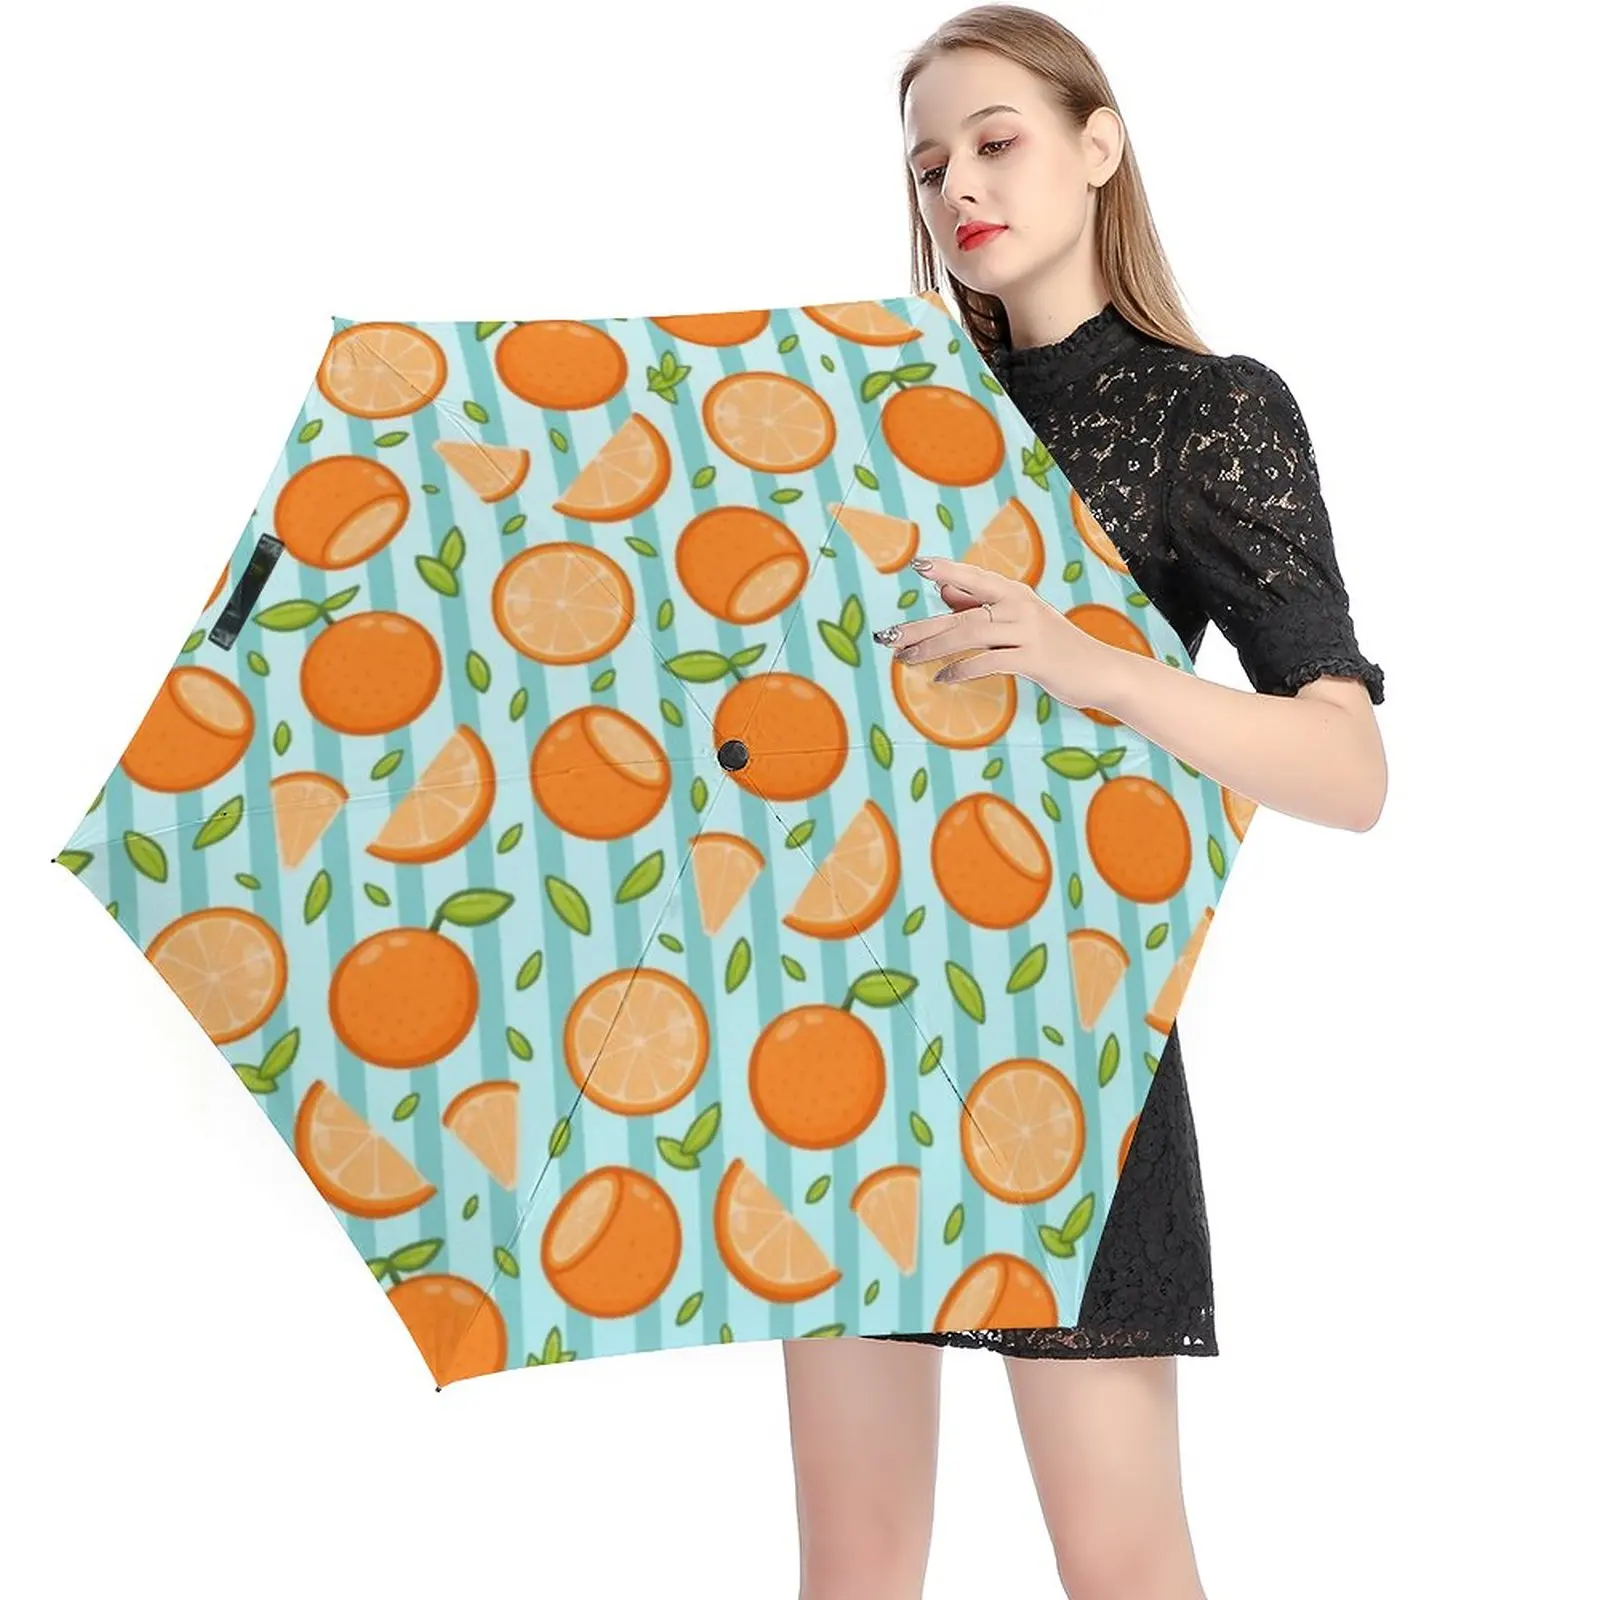 

Orange Oranges 5 Fold 6 Ribs Umbrella Cartoon Fruit Print Portable Pocket Umbrella Wind Resistant Umbrellas for Men Women